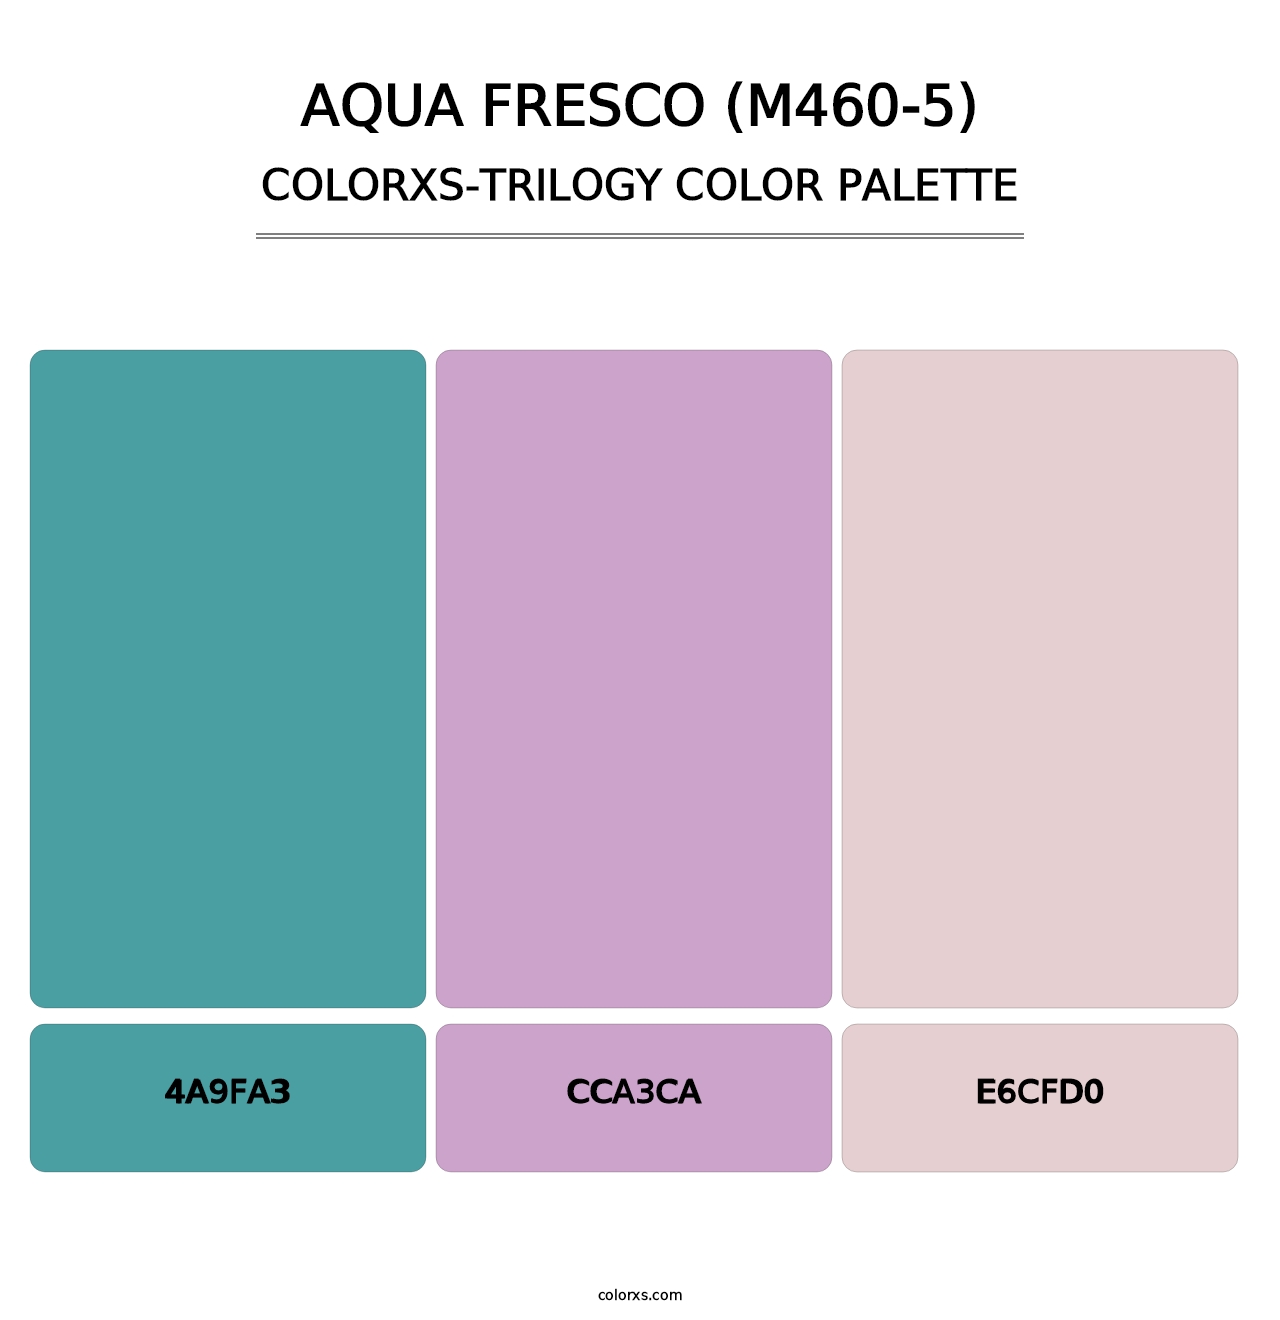 Aqua Fresco (M460-5) - Colorxs Trilogy Palette